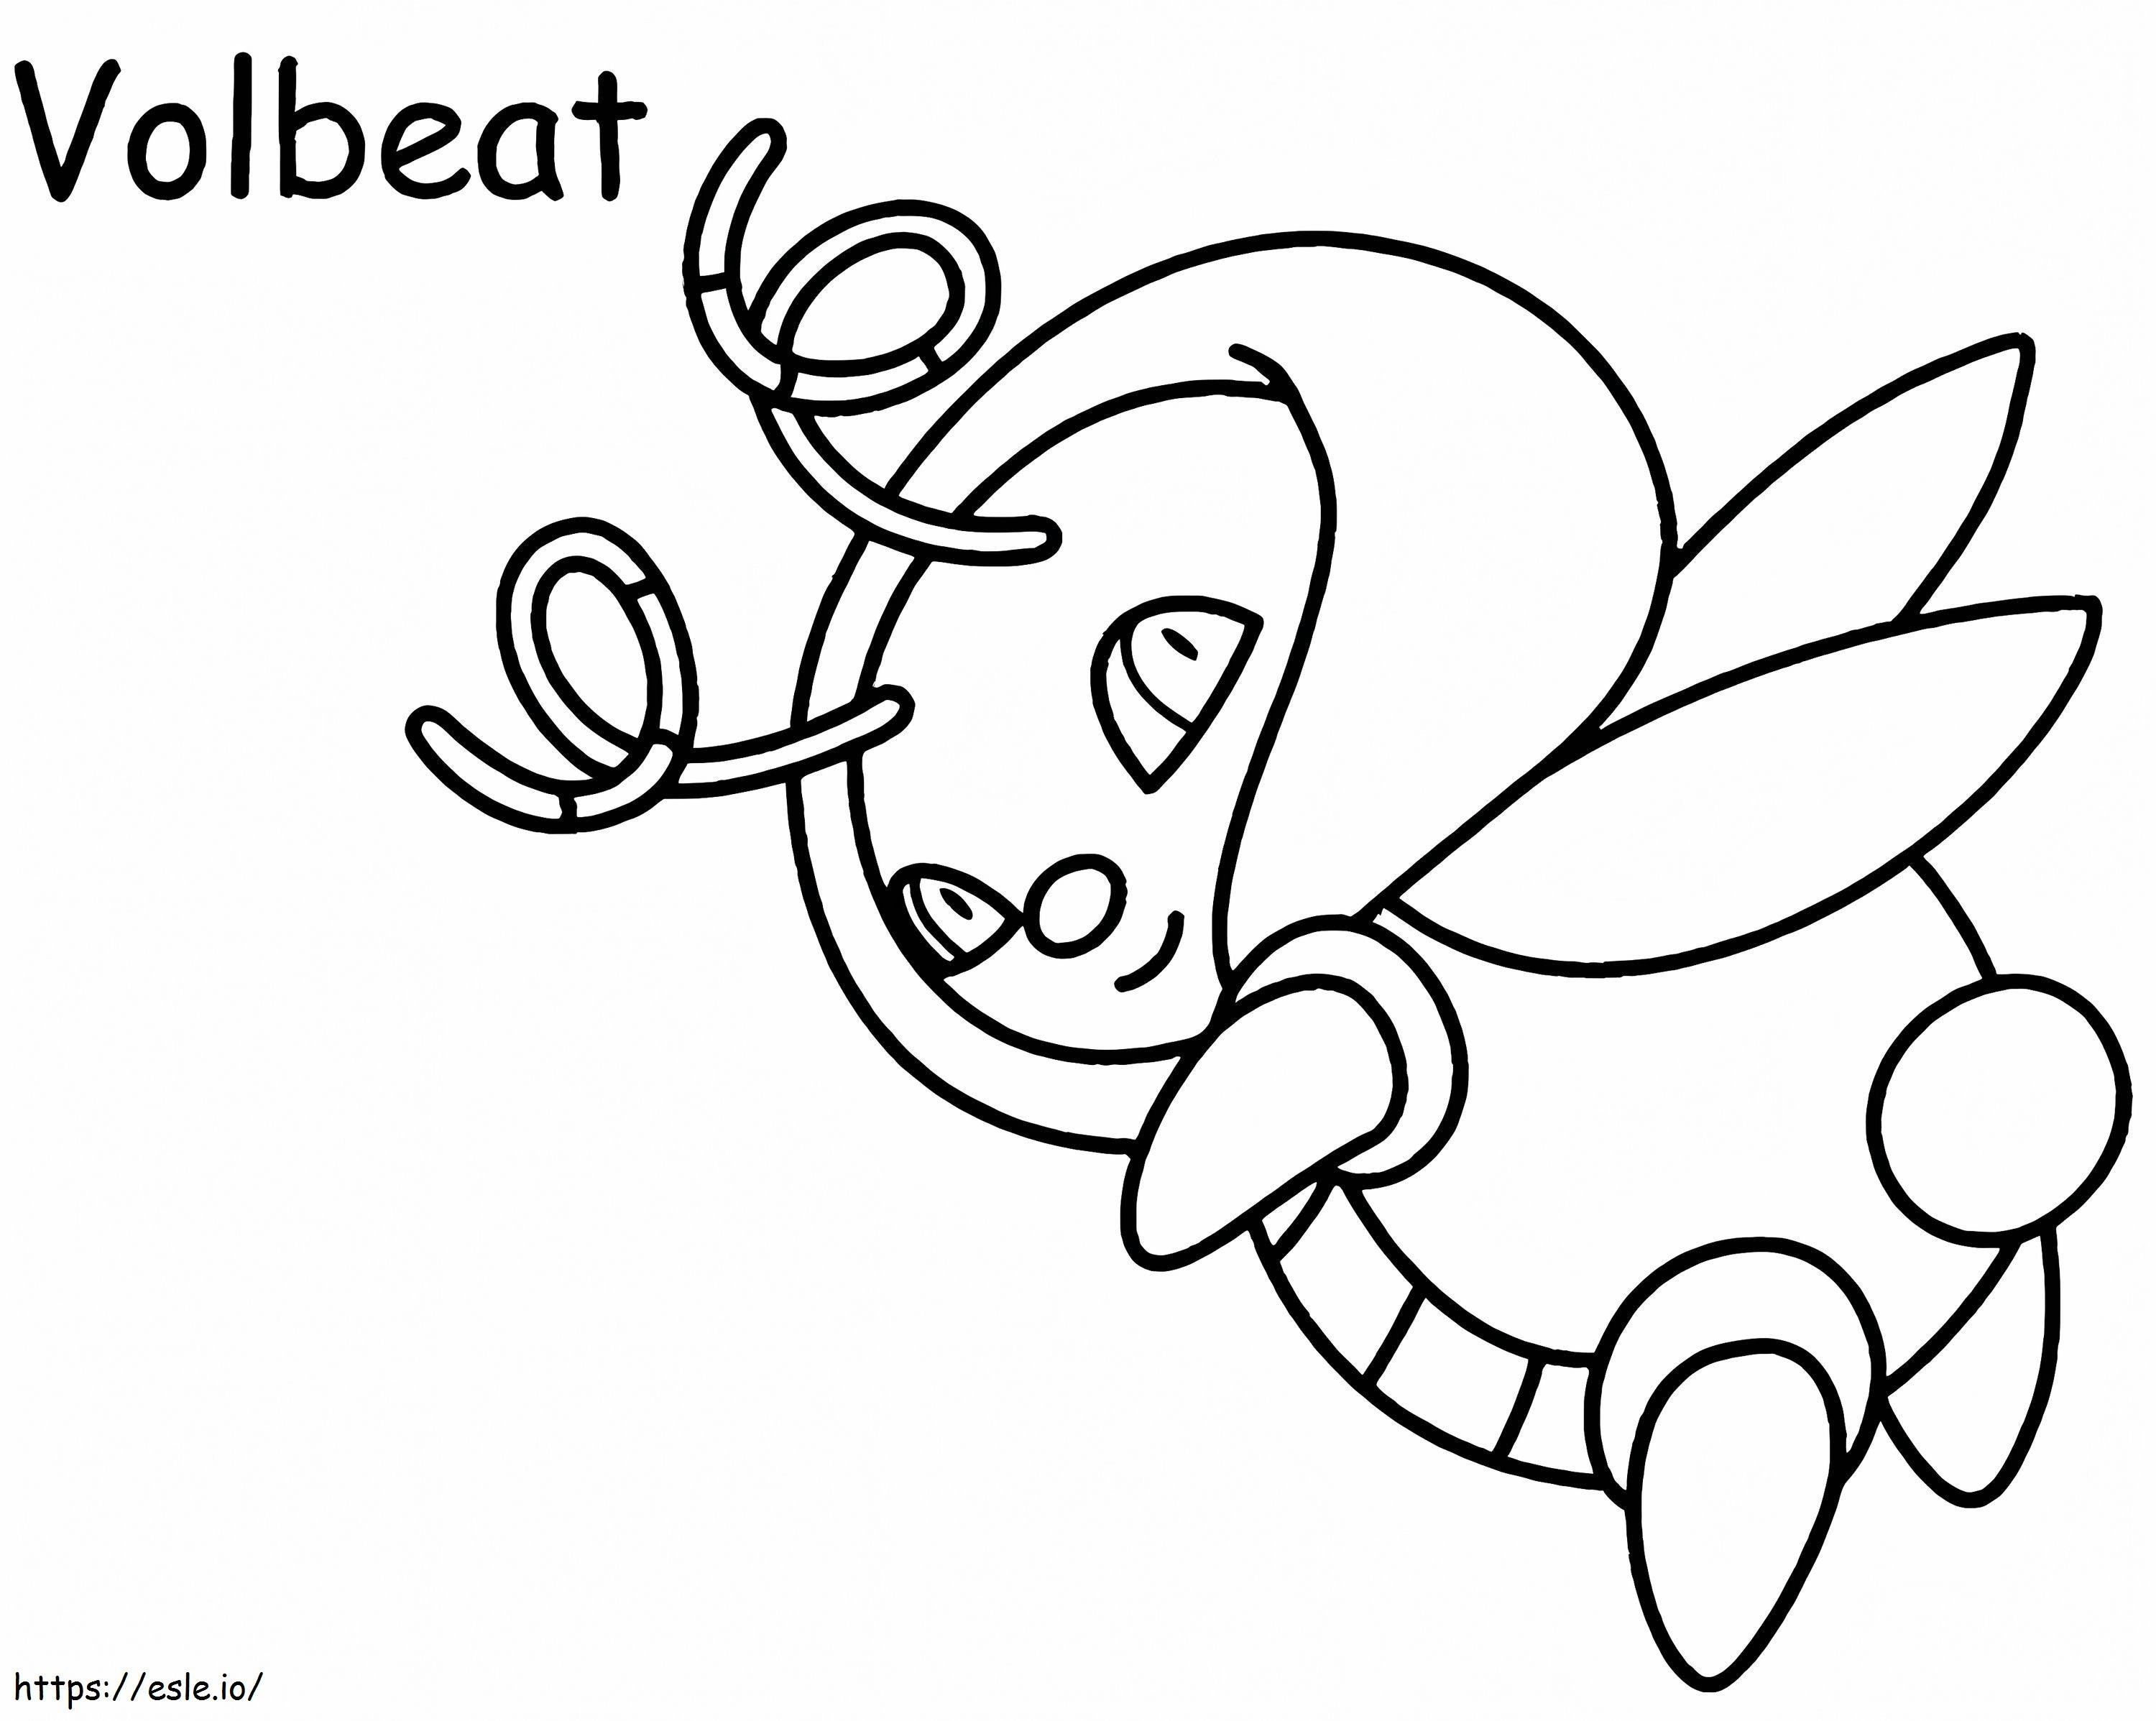 Printable Volbeat Pokemon coloring page